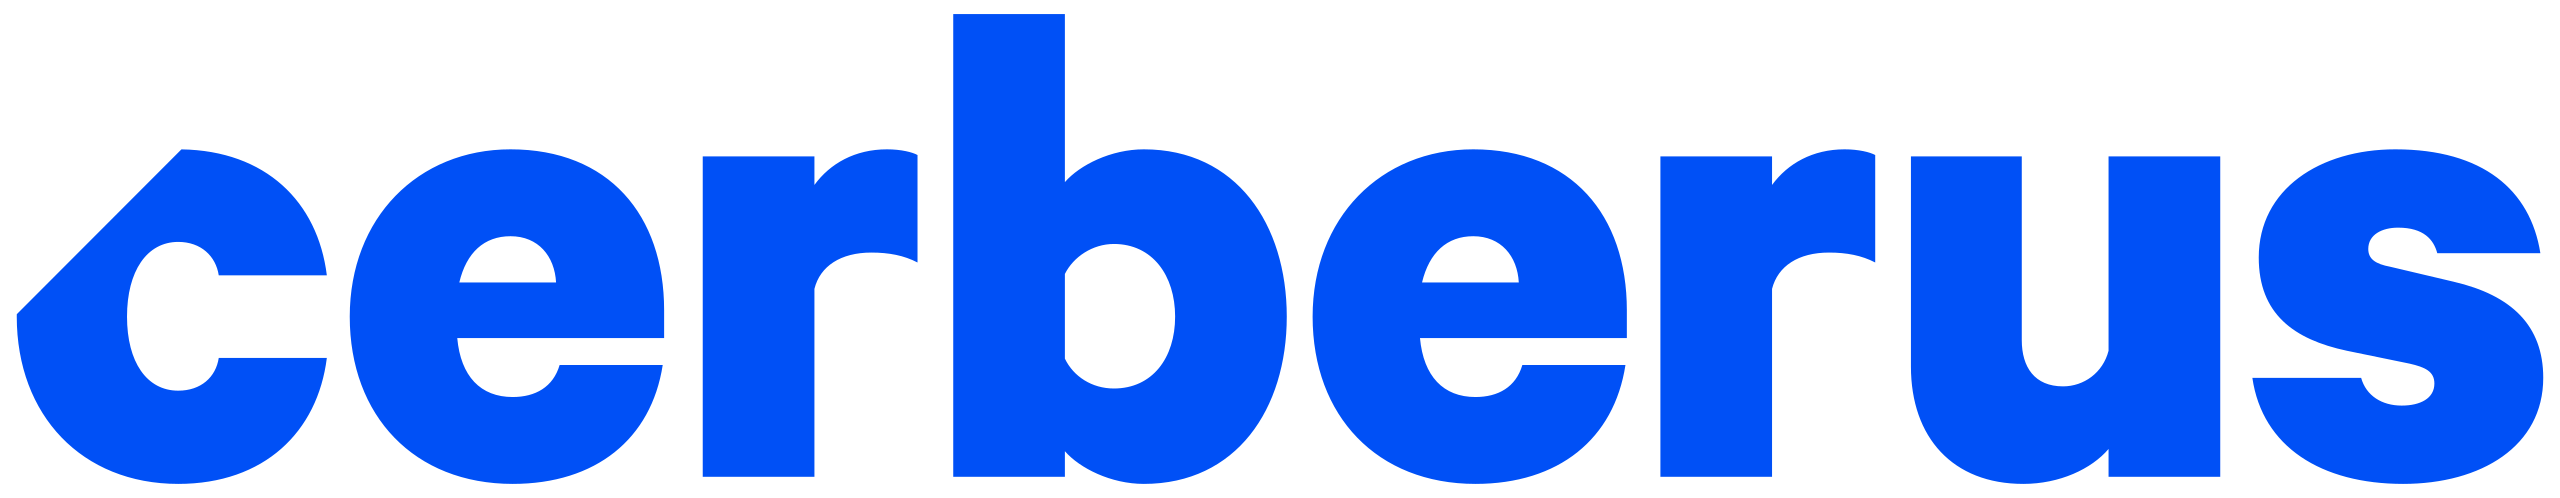 Cerberus capital management logo.svg